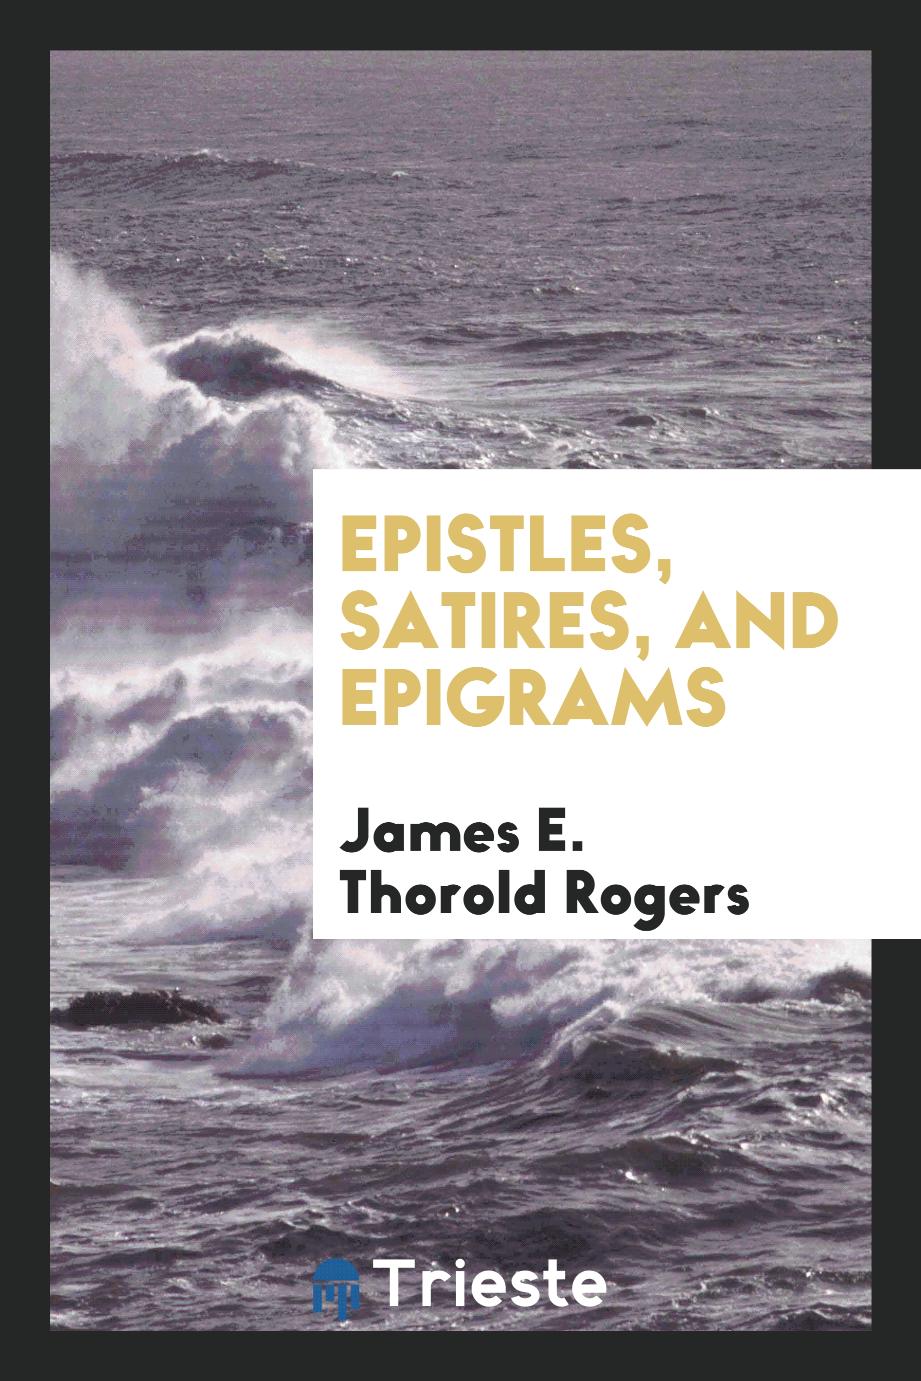 Epistles, satires, and epigrams